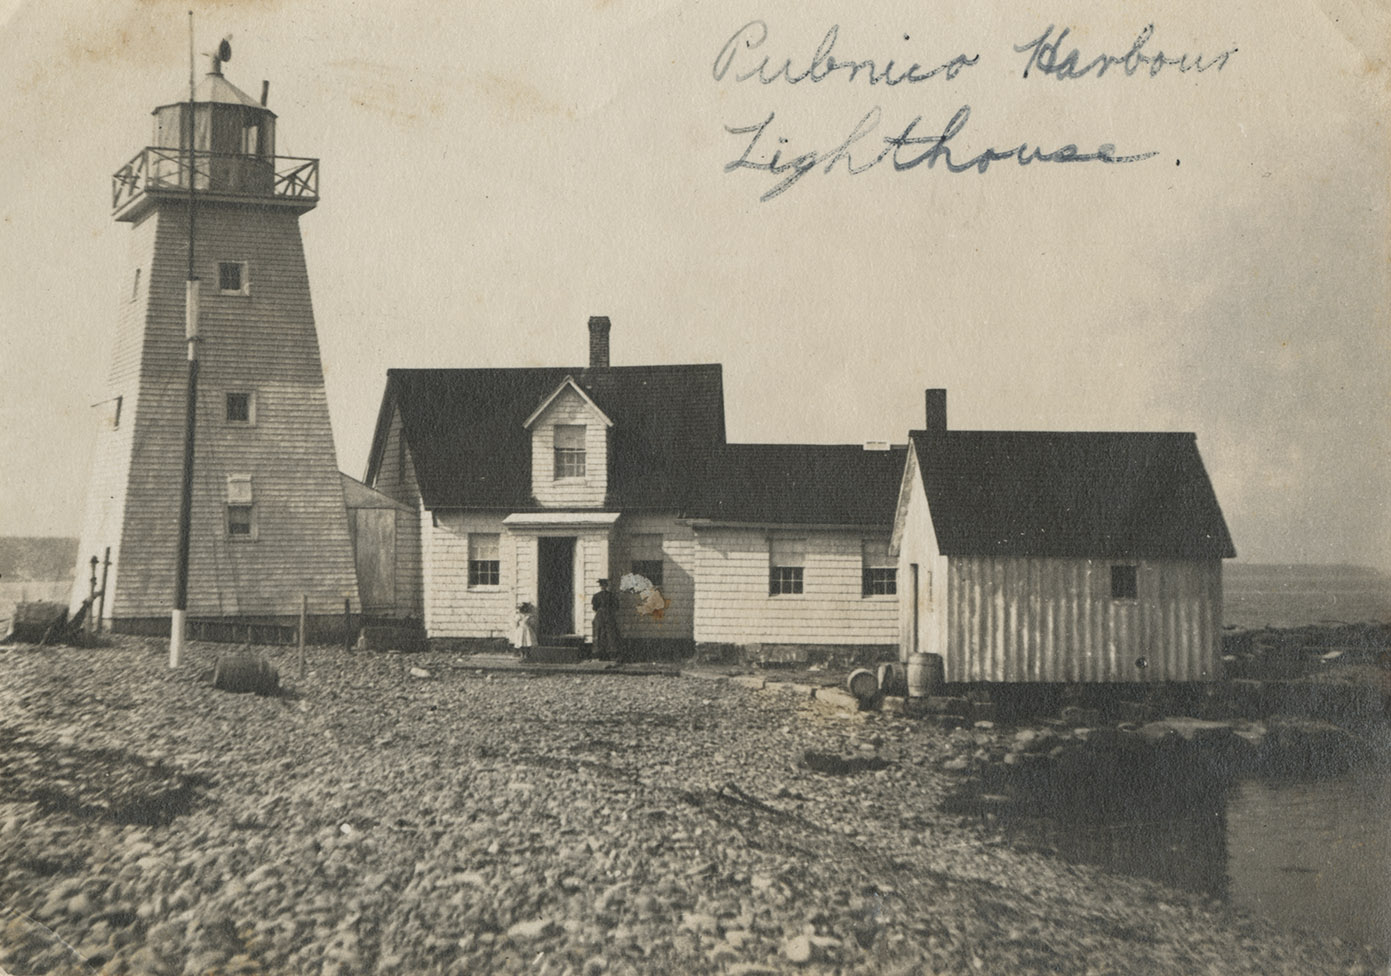 communityalbums - Pubnico Harbour Lighthouse 
Lower East Pubnico